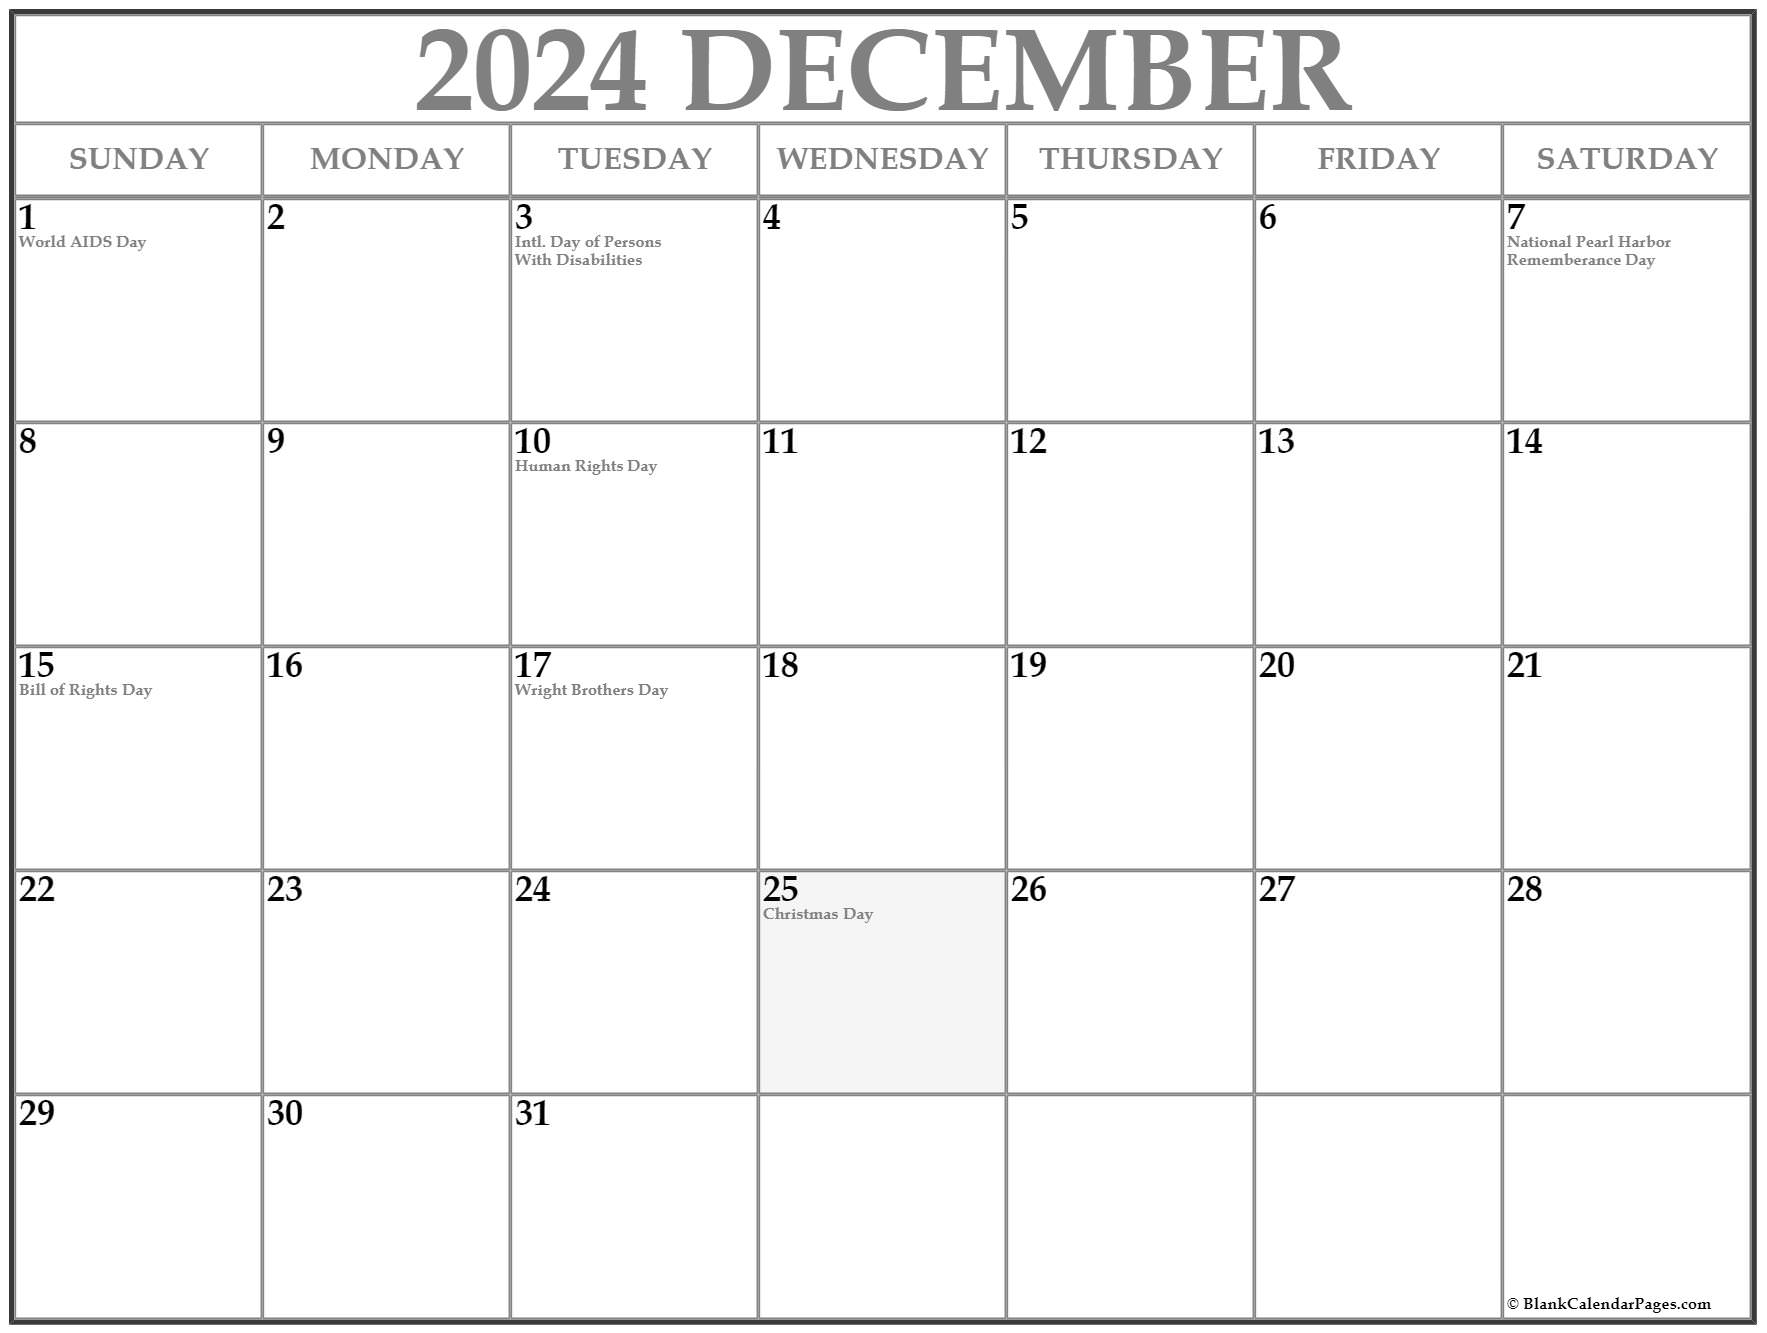 december-2024-calendar-mathrubhumi-cool-latest-incredible-january-2024-calendar-blank